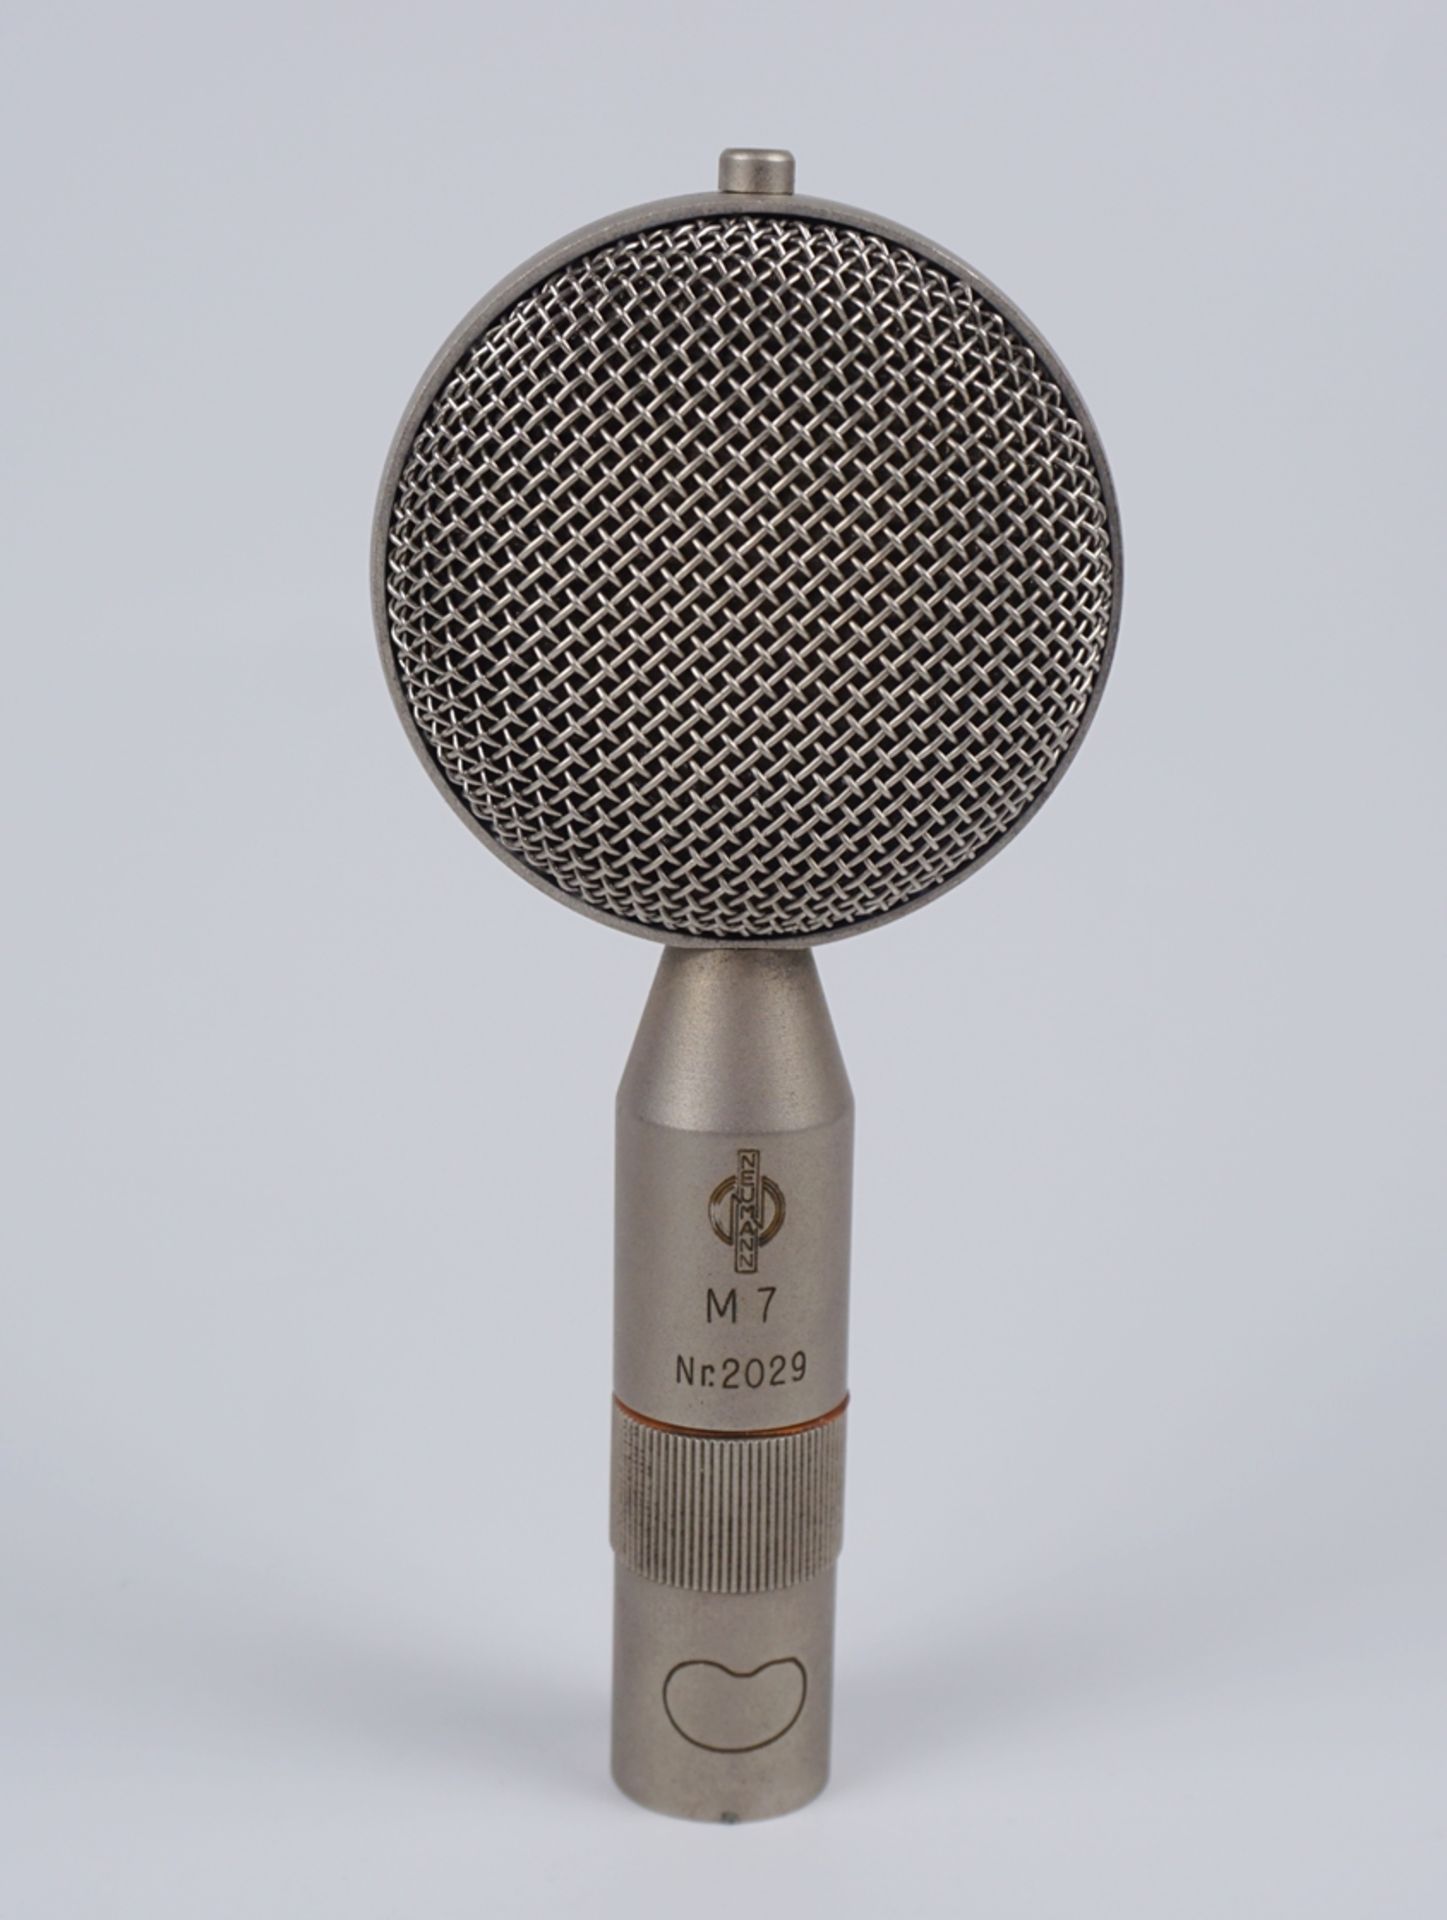 Kondensator-Mikrofonkapsel M 7, Georg Neumann&Co, Gefell/Vogland - Image 2 of 5